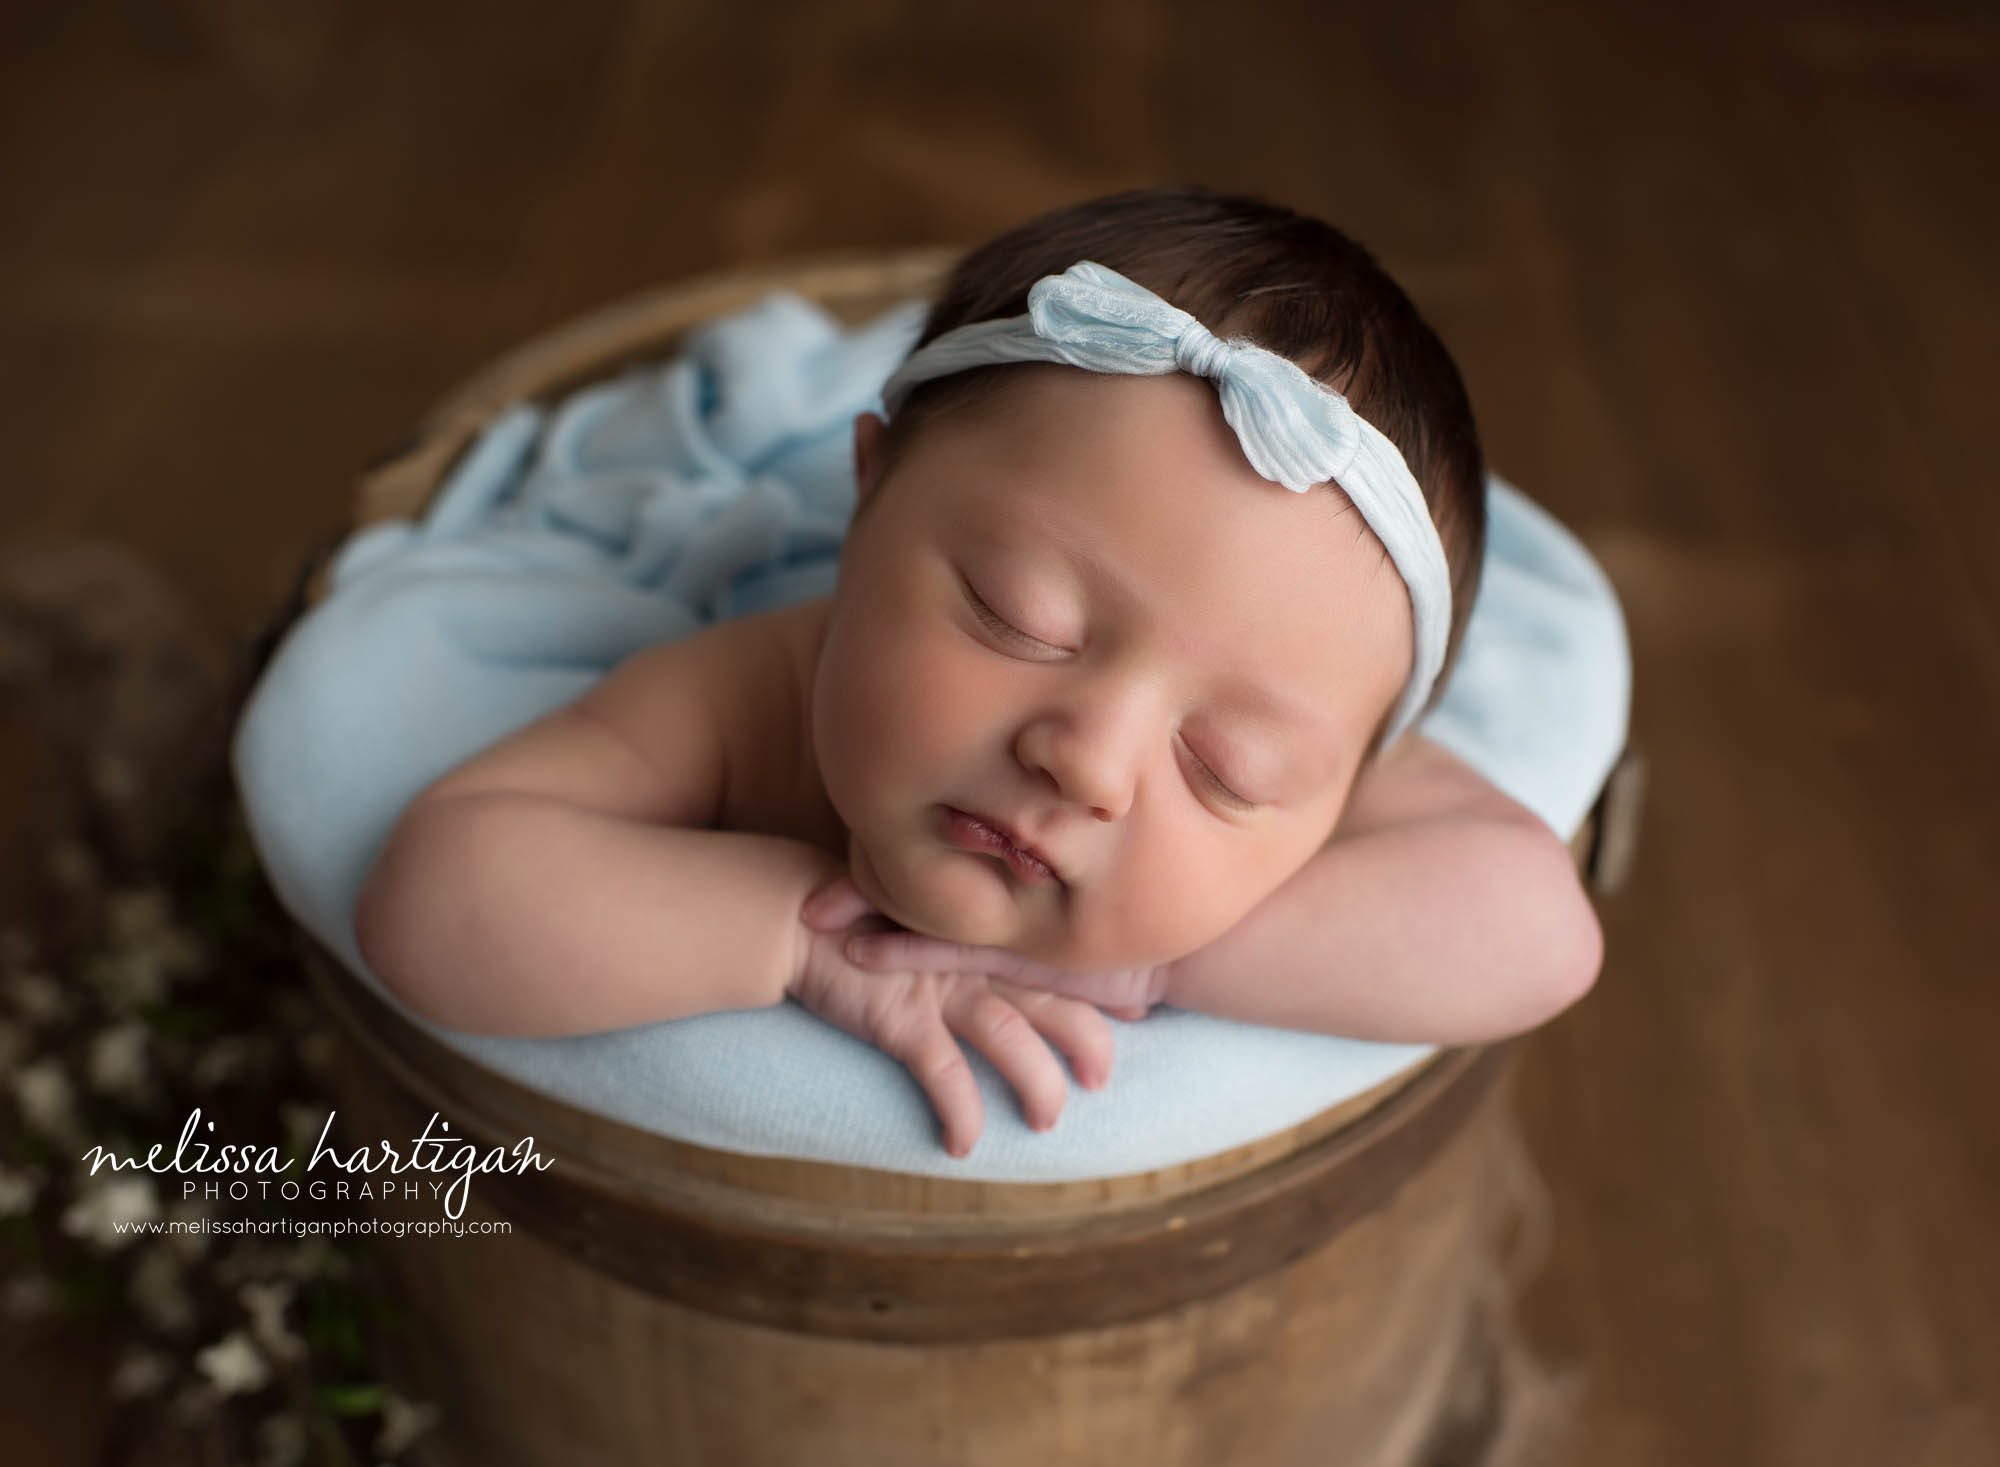 Leila CT Newborn Session baby girl sleeping in wooden bucket